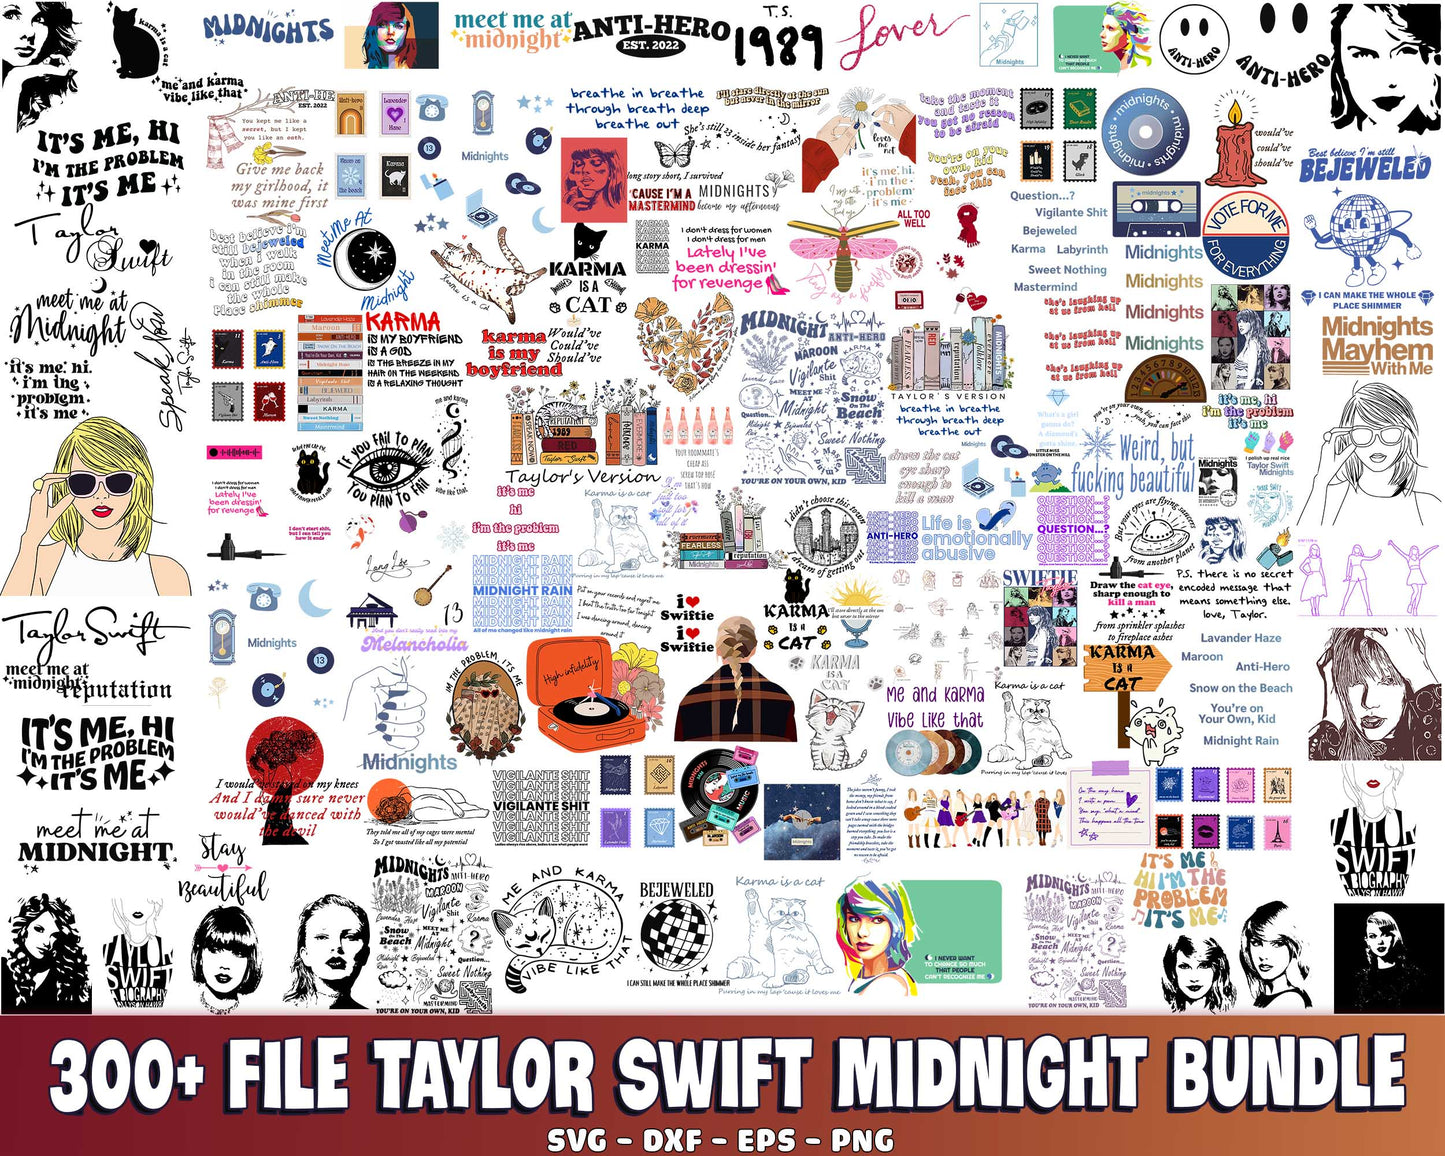 300+ file Taylor Midnights bundle SVG DXF EPS PNG, Taylor Swift Inspired Svg, Swiftie Svg, Swift Midnight svg, cricut, for Cricut, Silhouette, digital, file cut